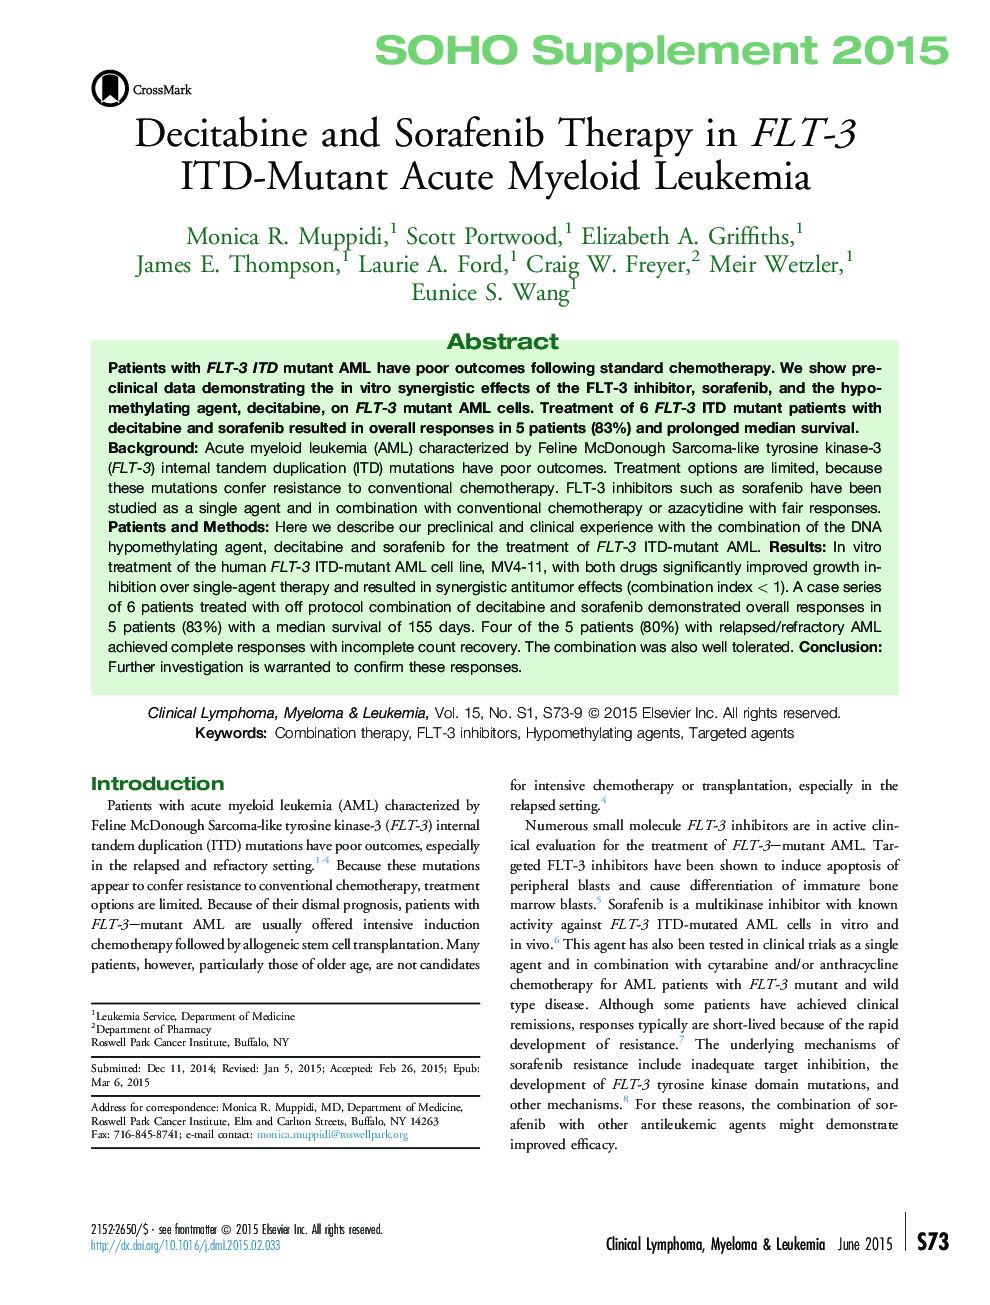 Decitabine and Sorafenib Therapy in FLT-3 ITD-Mutant Acute Myeloid Leukemia